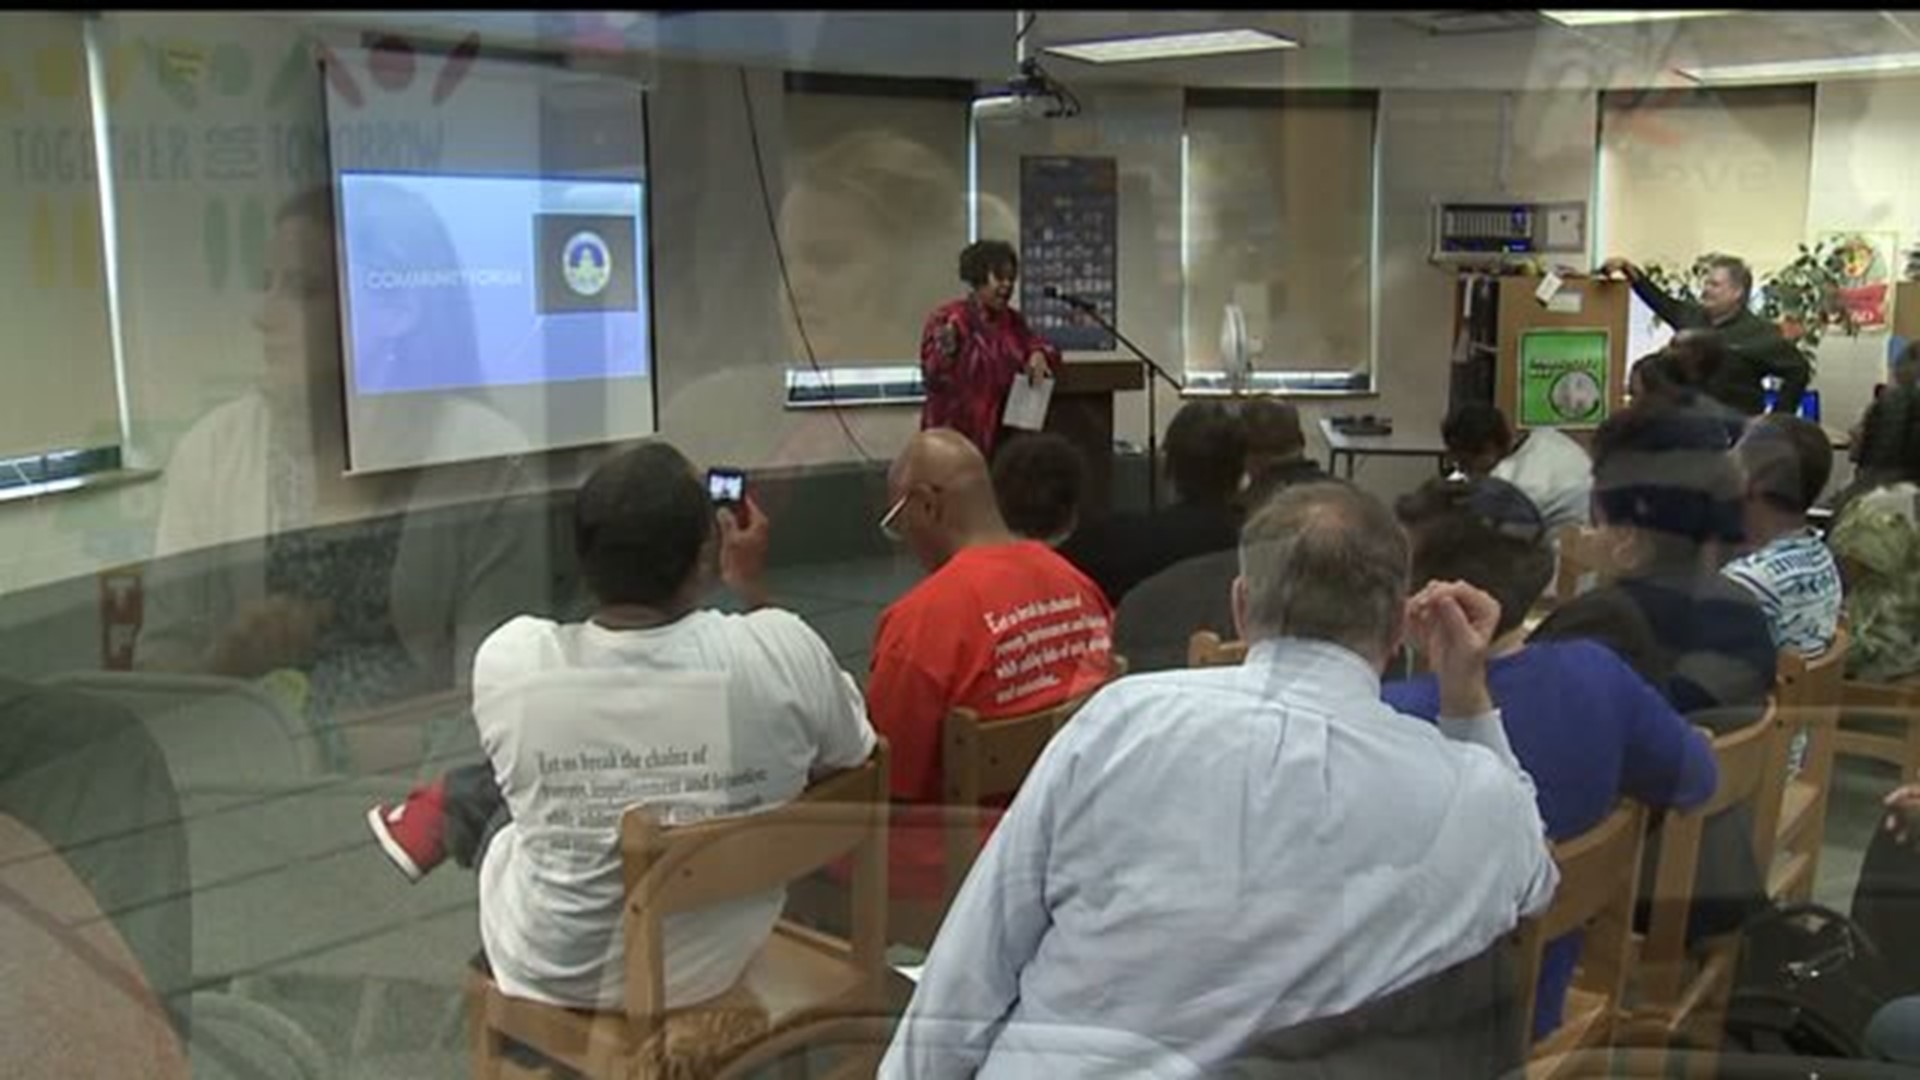 Community forum held to prevent violence in Harrisburg schools